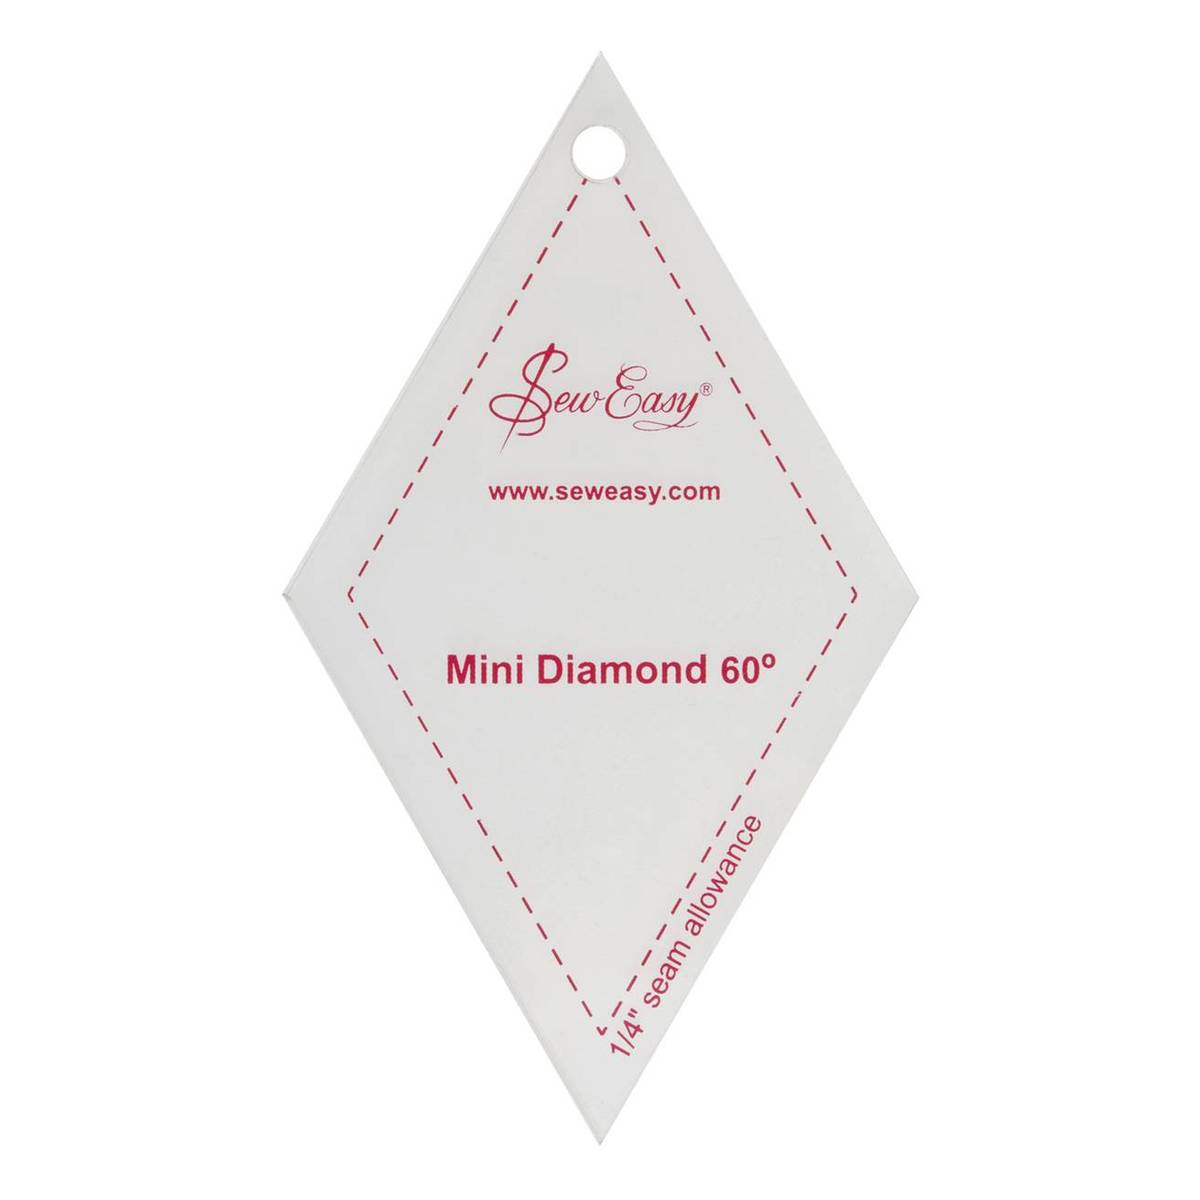 Mini 60 Degree Diamond diseño de llavero de acrílico para 